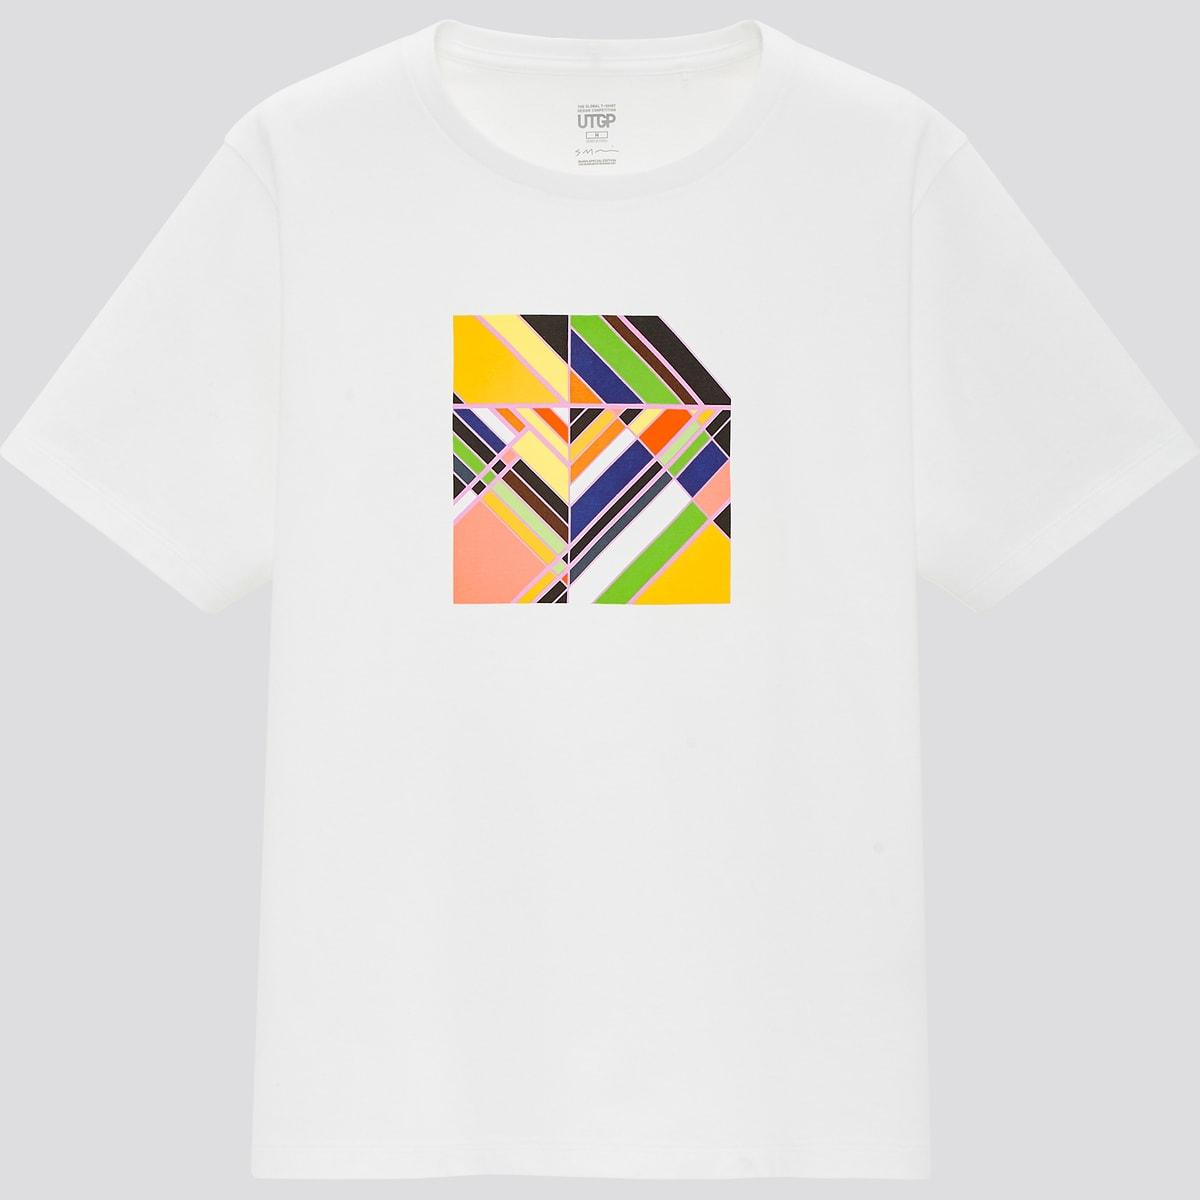 〈UT〉主催の「UTGP 2020 + MoMA」受賞者が発表。優秀作品をプリントしたTシャツが発売 - Slide:1